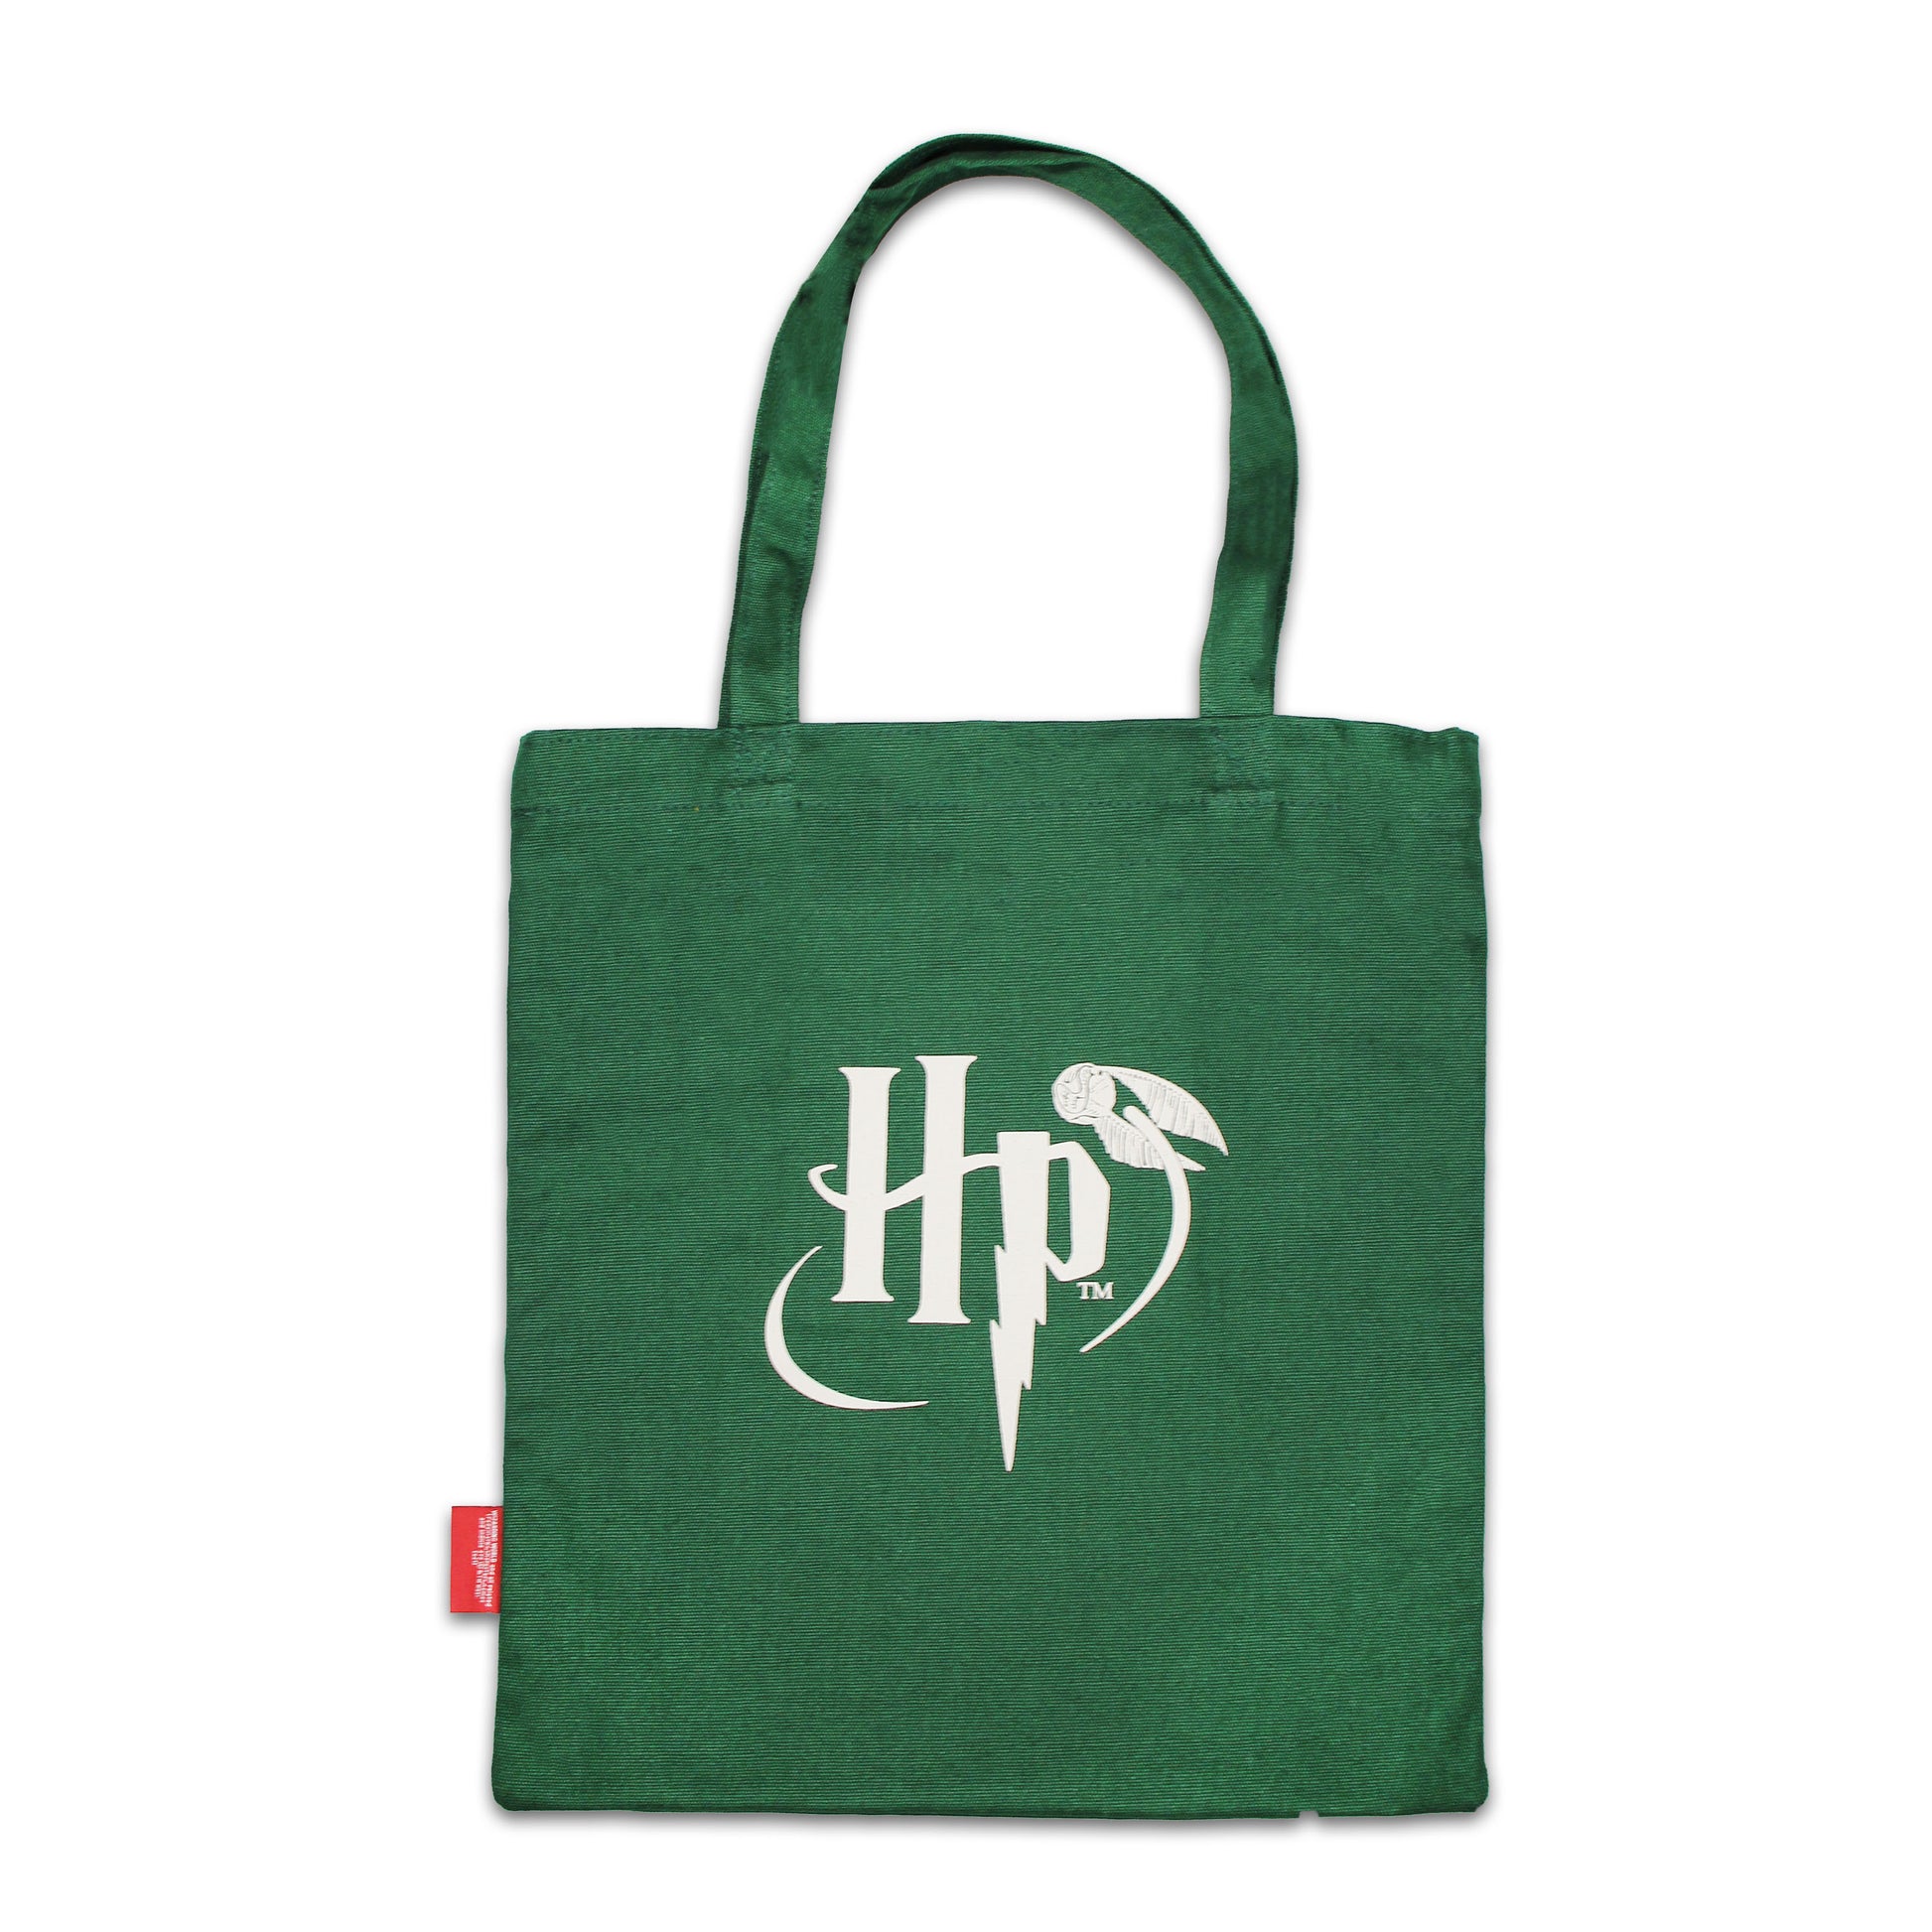 Harry Potter Official Merchandise Slytherin Tote Shopper Bag